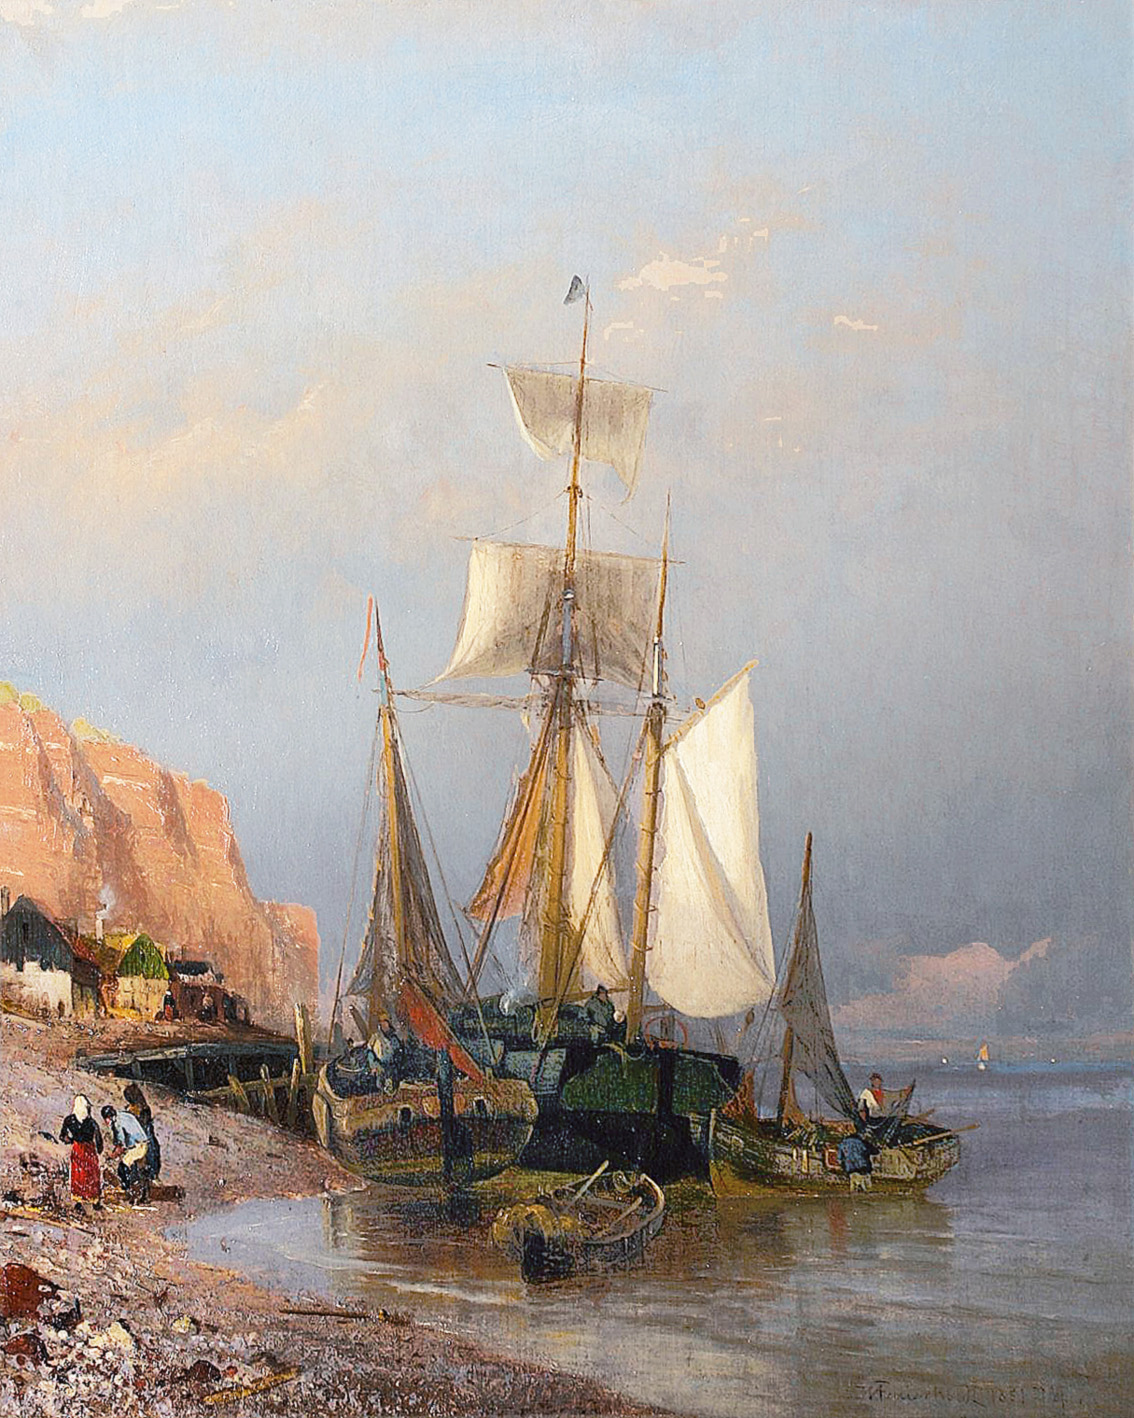 Boats at the coast